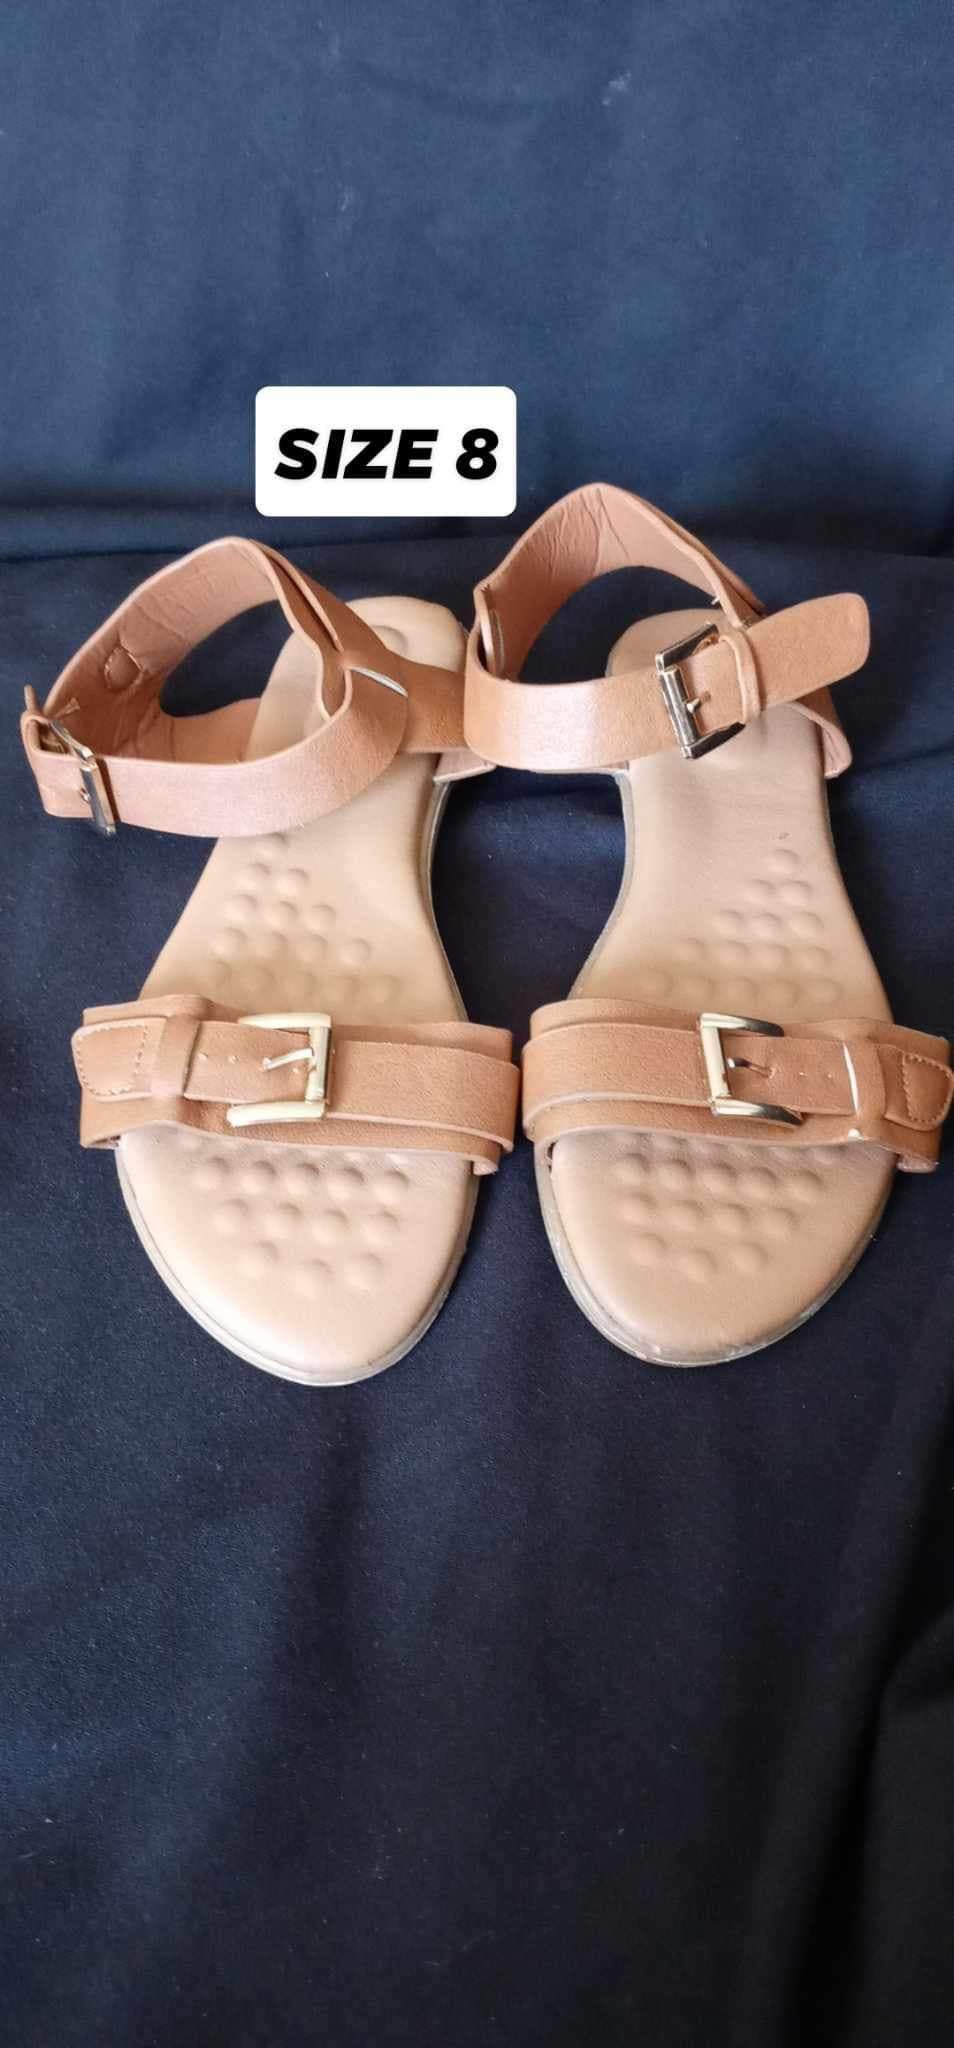 New Women’s Sandals Size 8